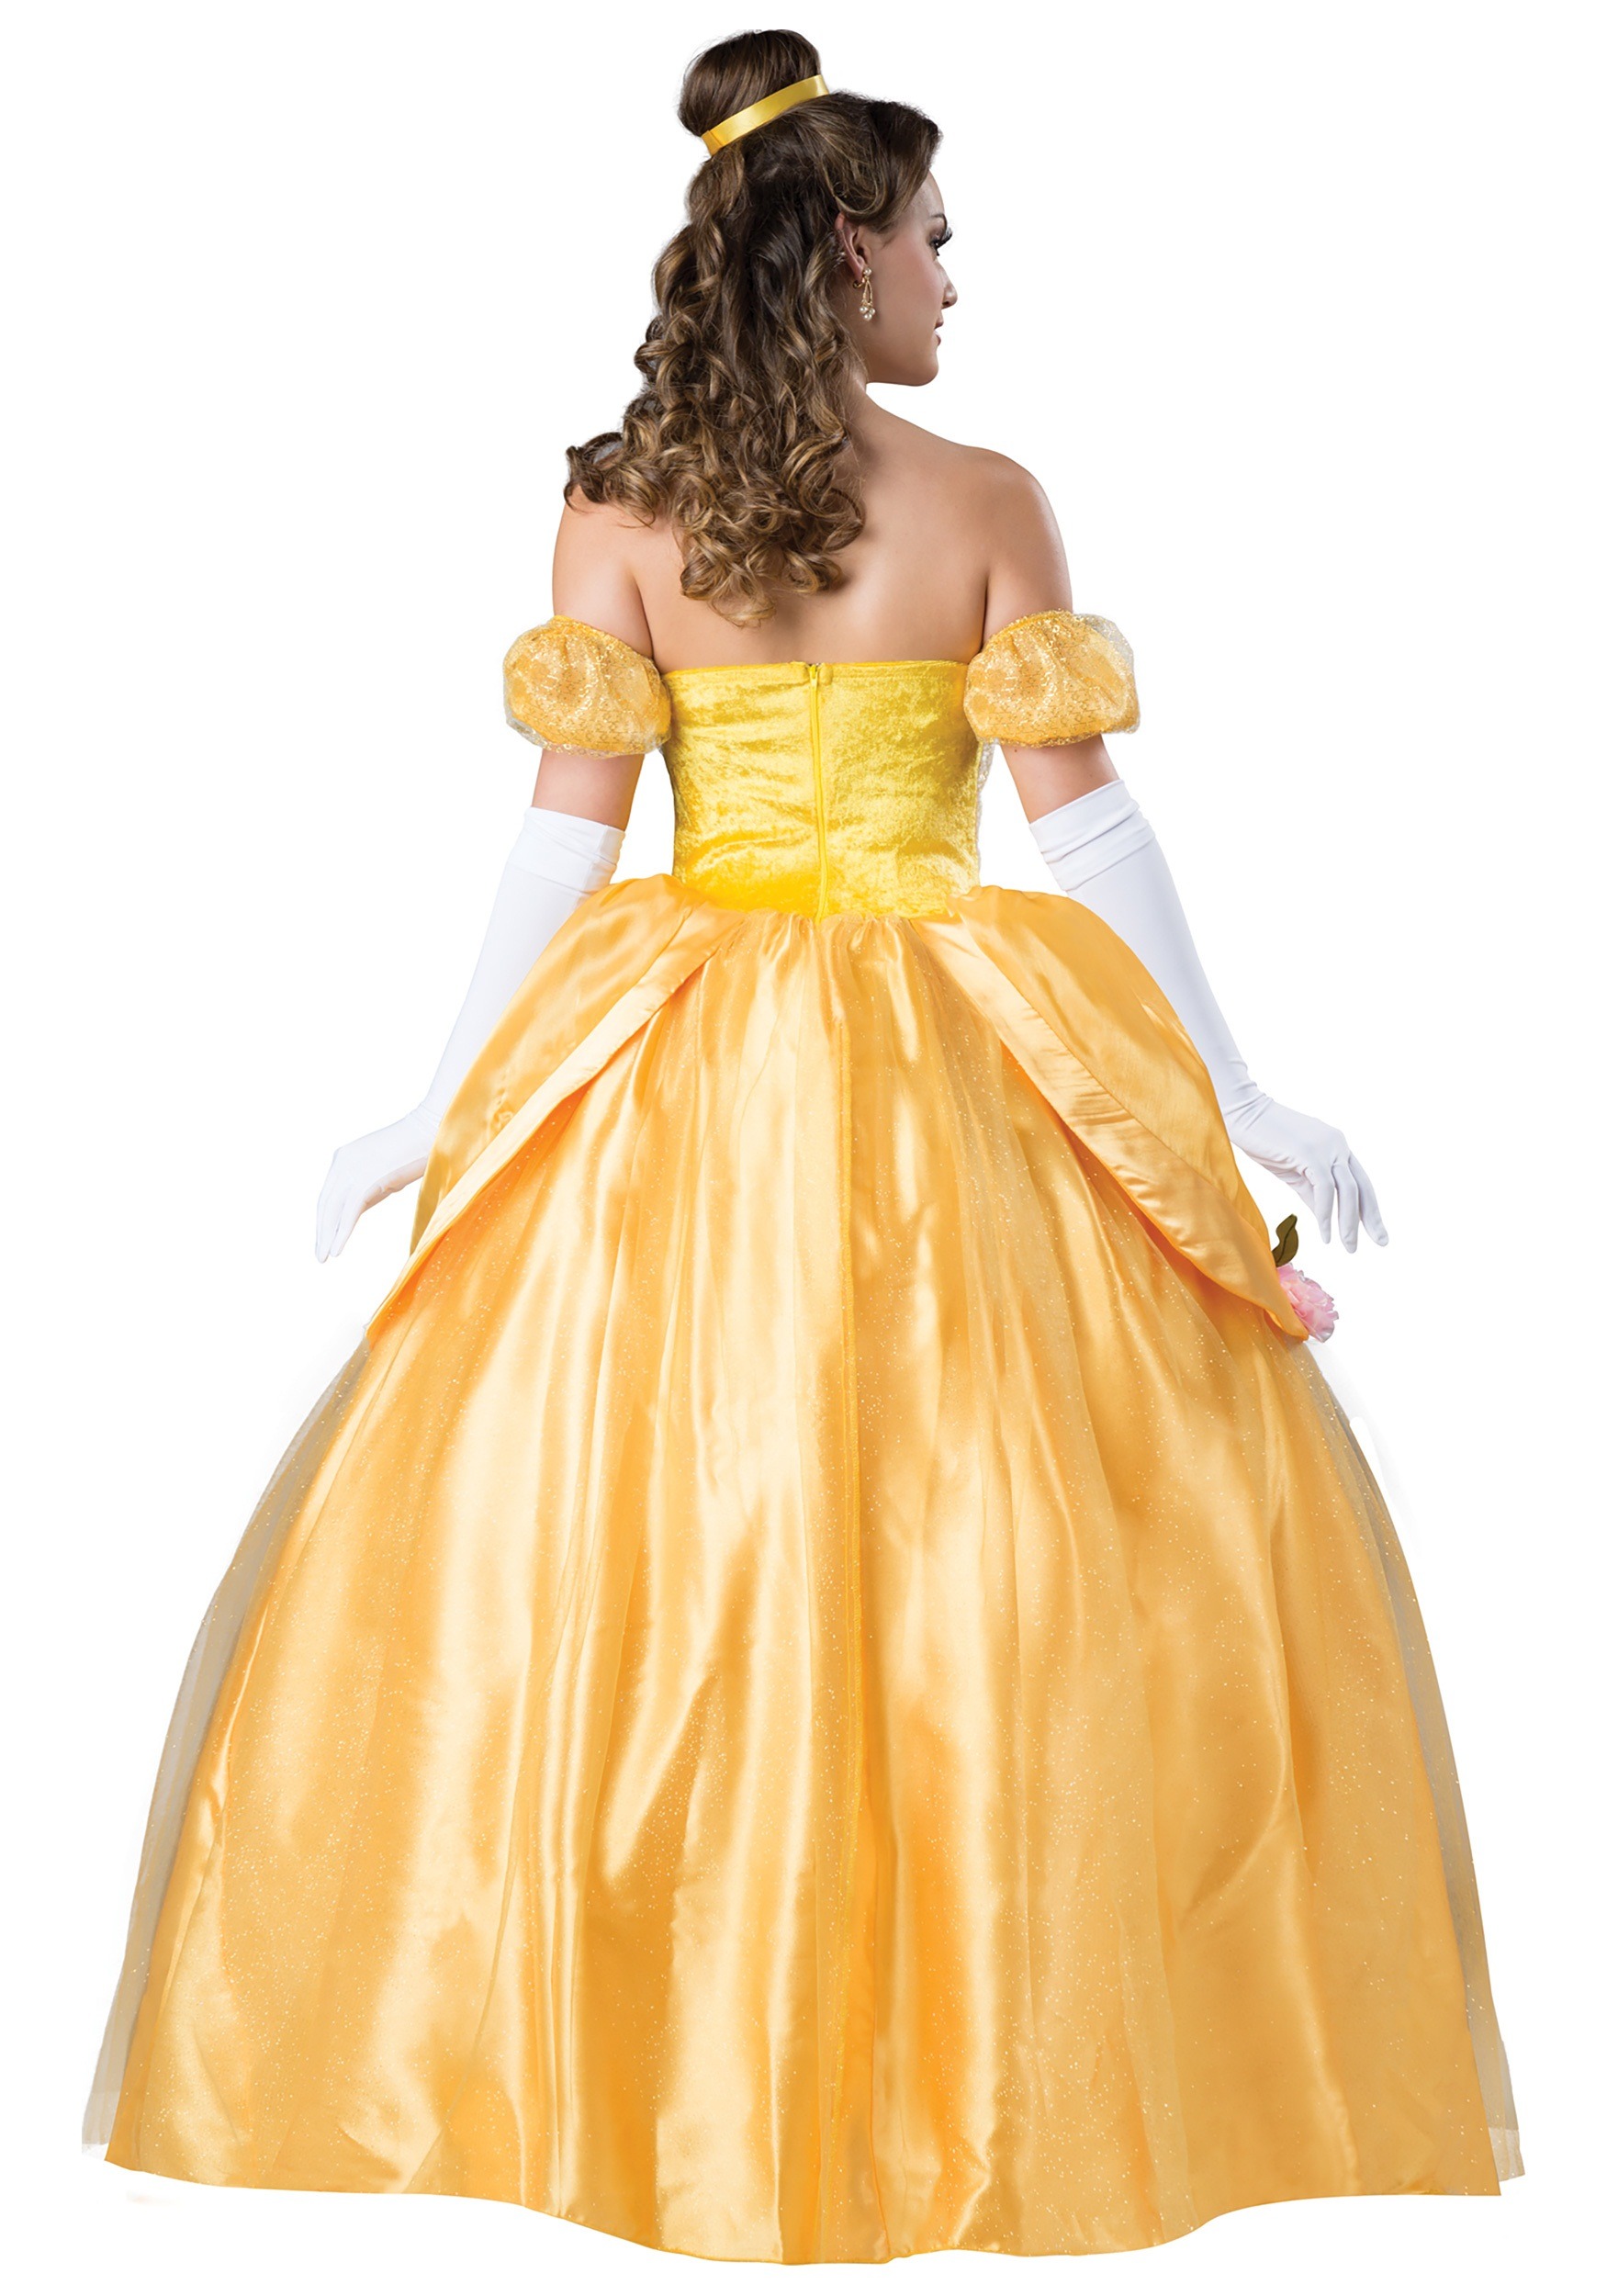 Princess Costume Ideas